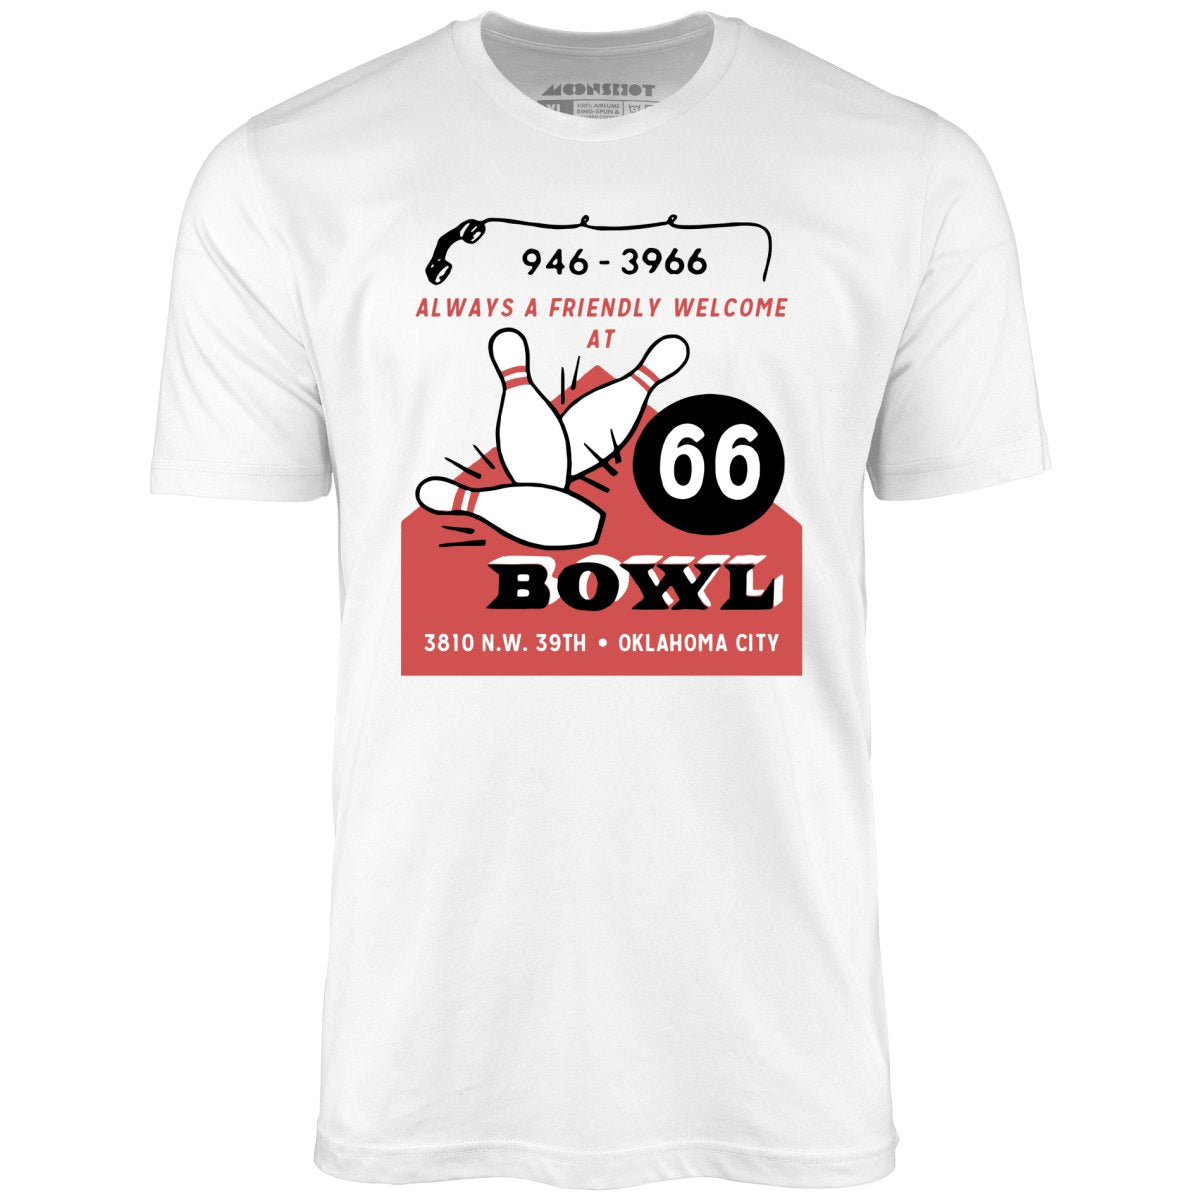 66 Bowl - Oklahoma City, OK - Vintage Bowling Alley - Unisex T-Shirt